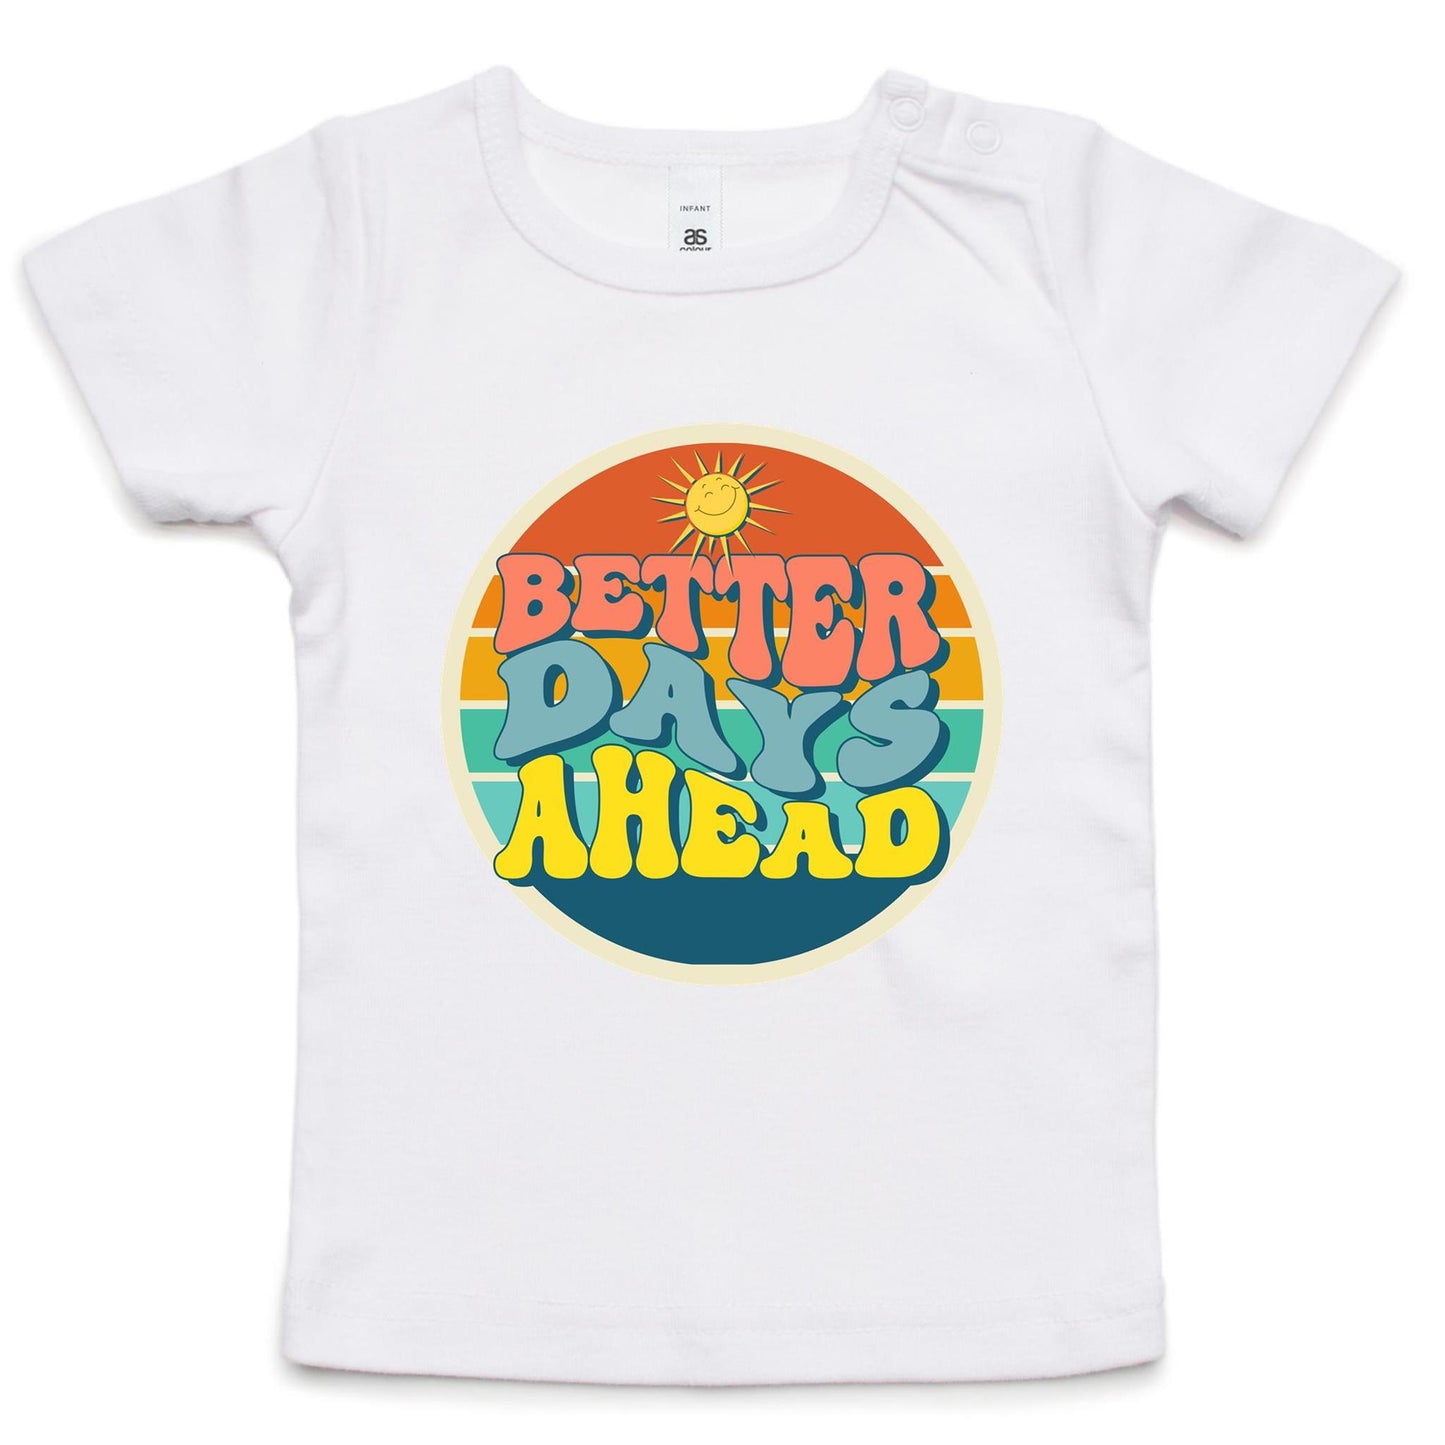 Better Days Ahead - Baby T-shirt White Baby T-shirt Motivation Retro